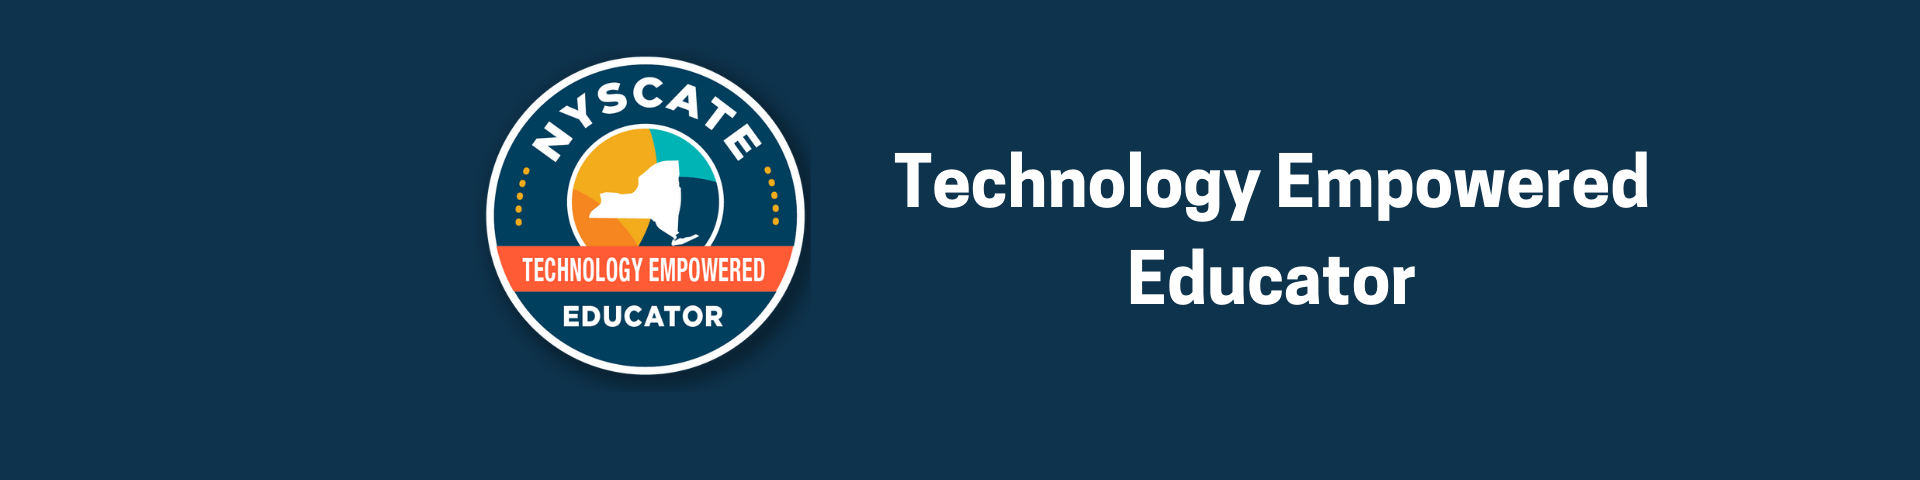 technology empowered educator